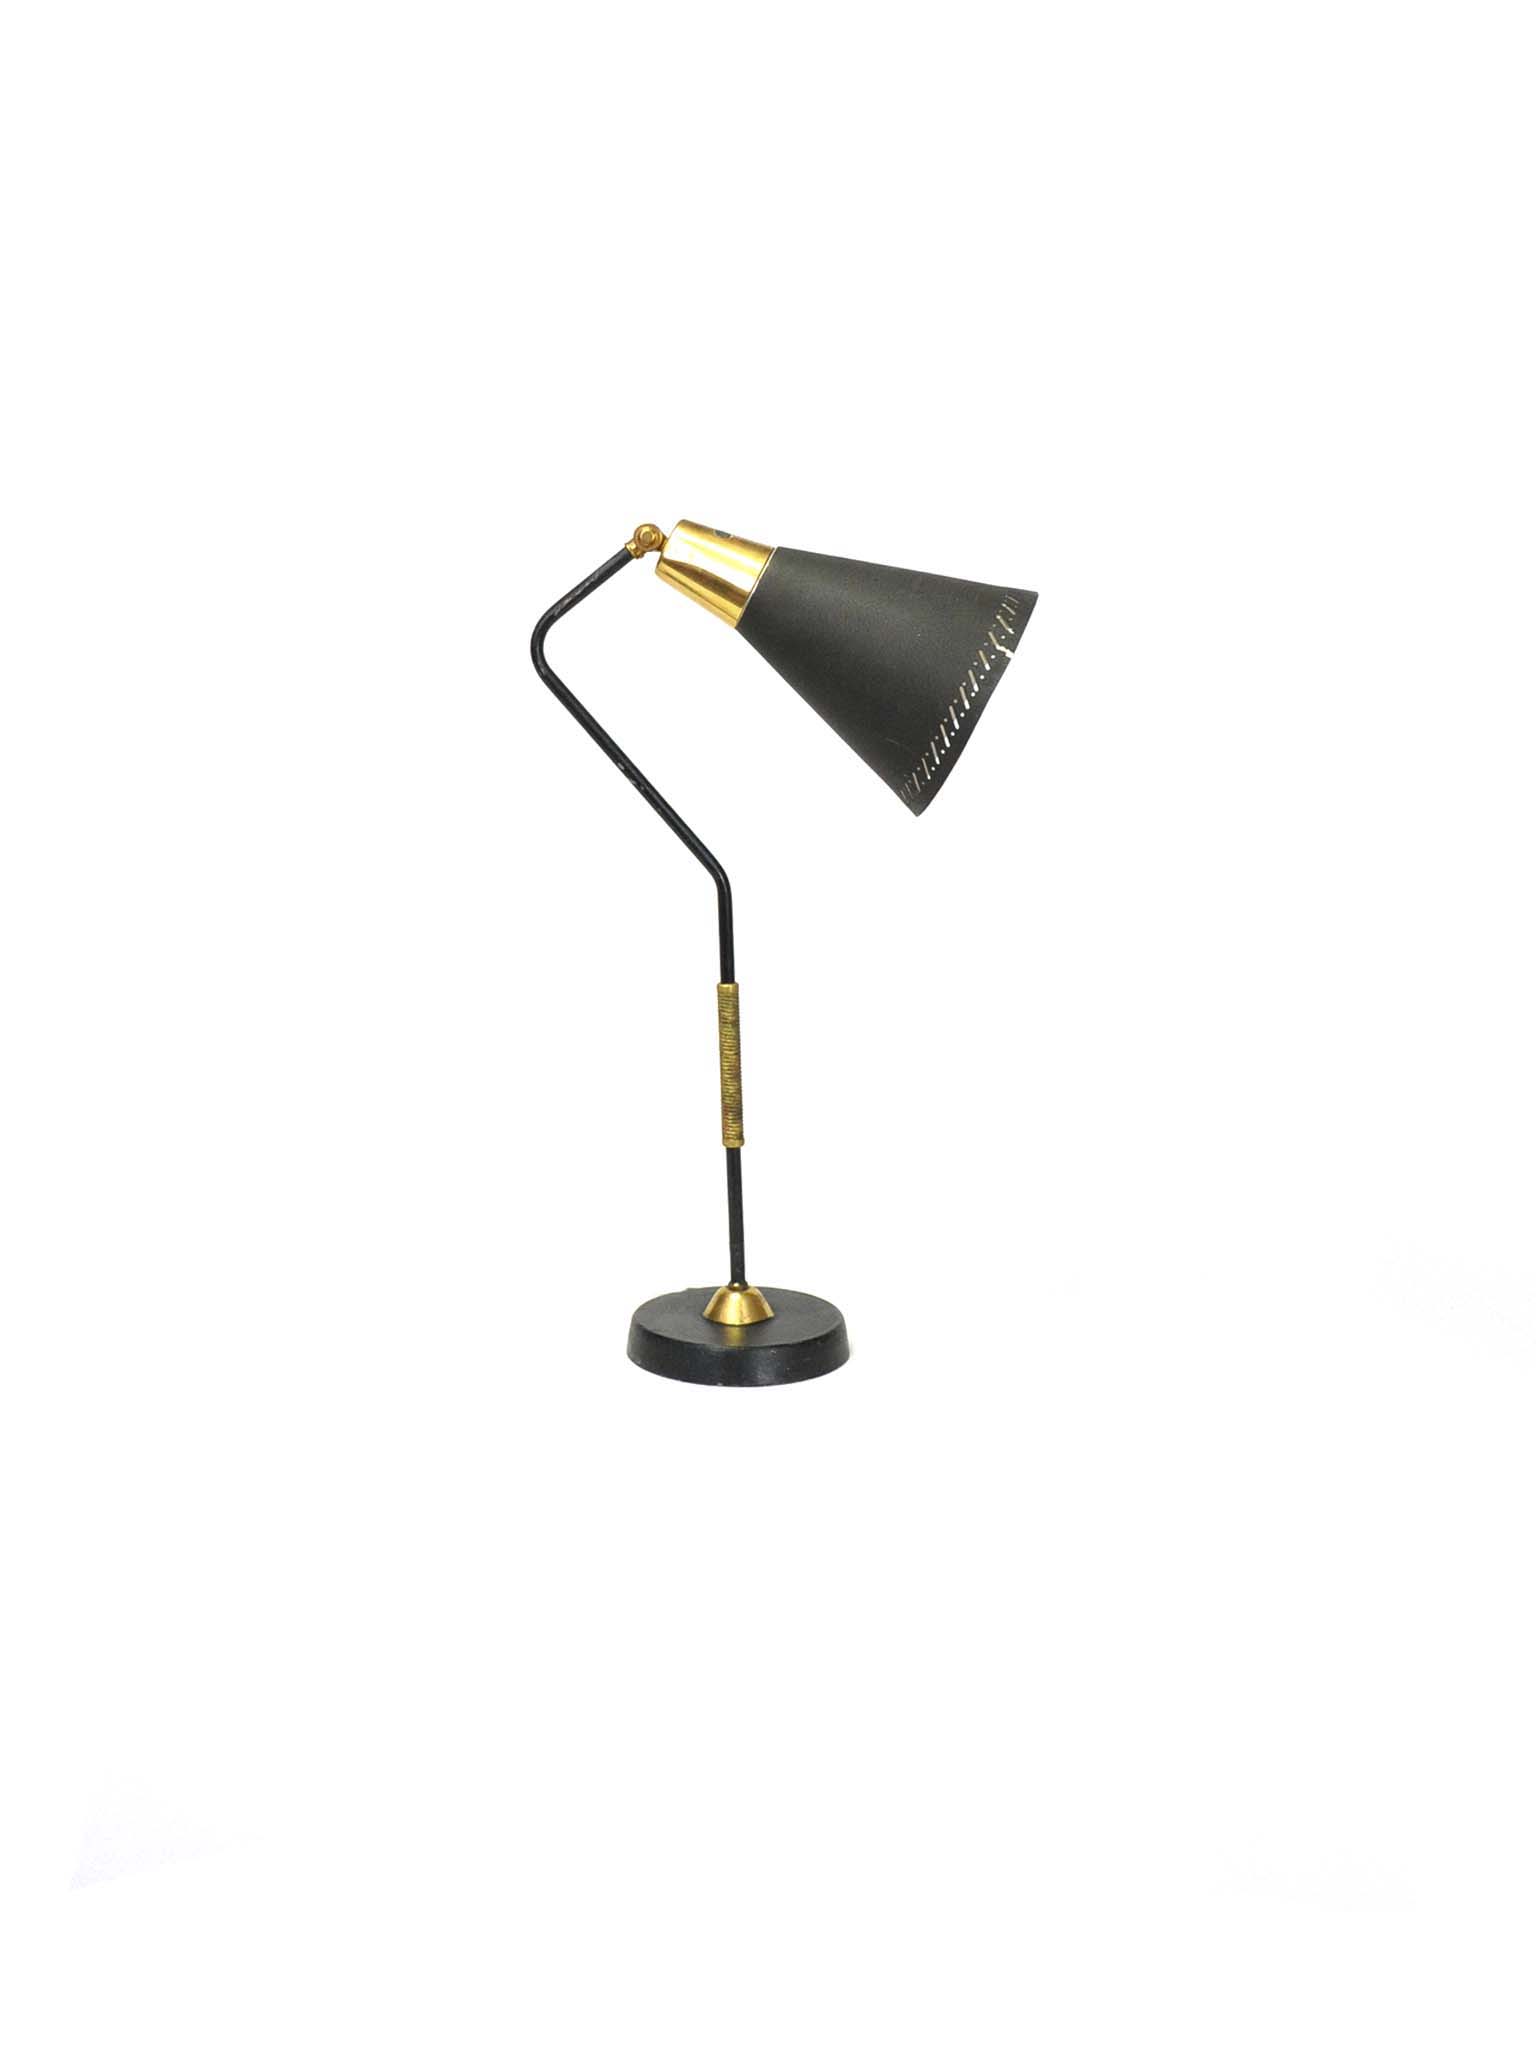 MODERNIST TABLE LAMP